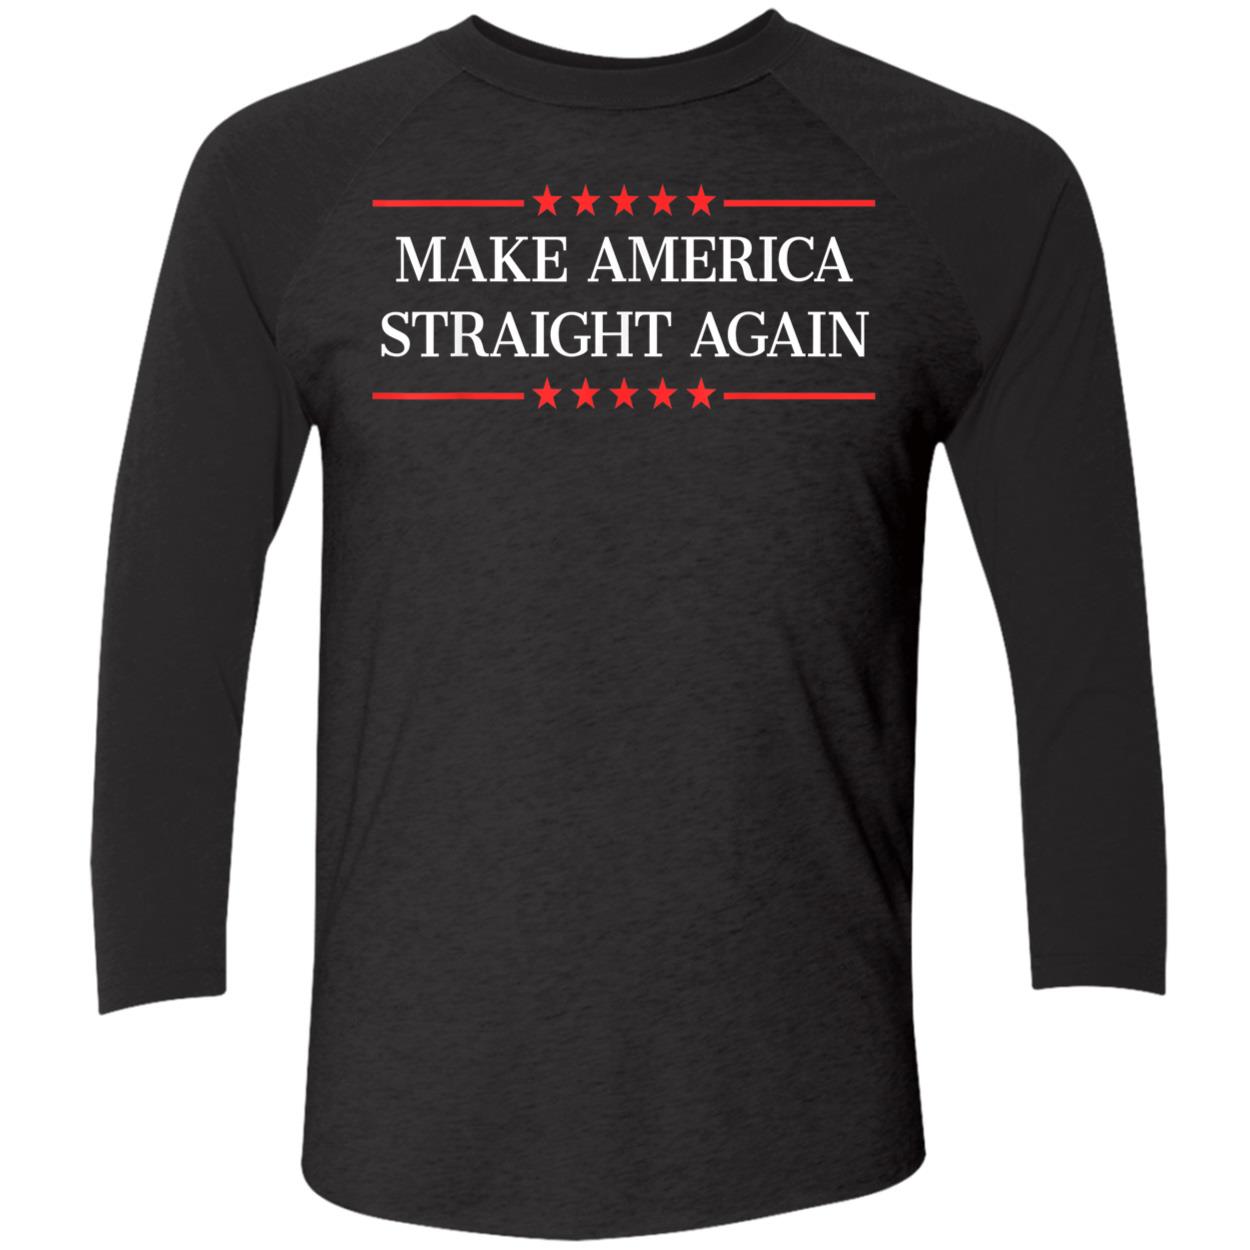 Make America Straight Again Shirt